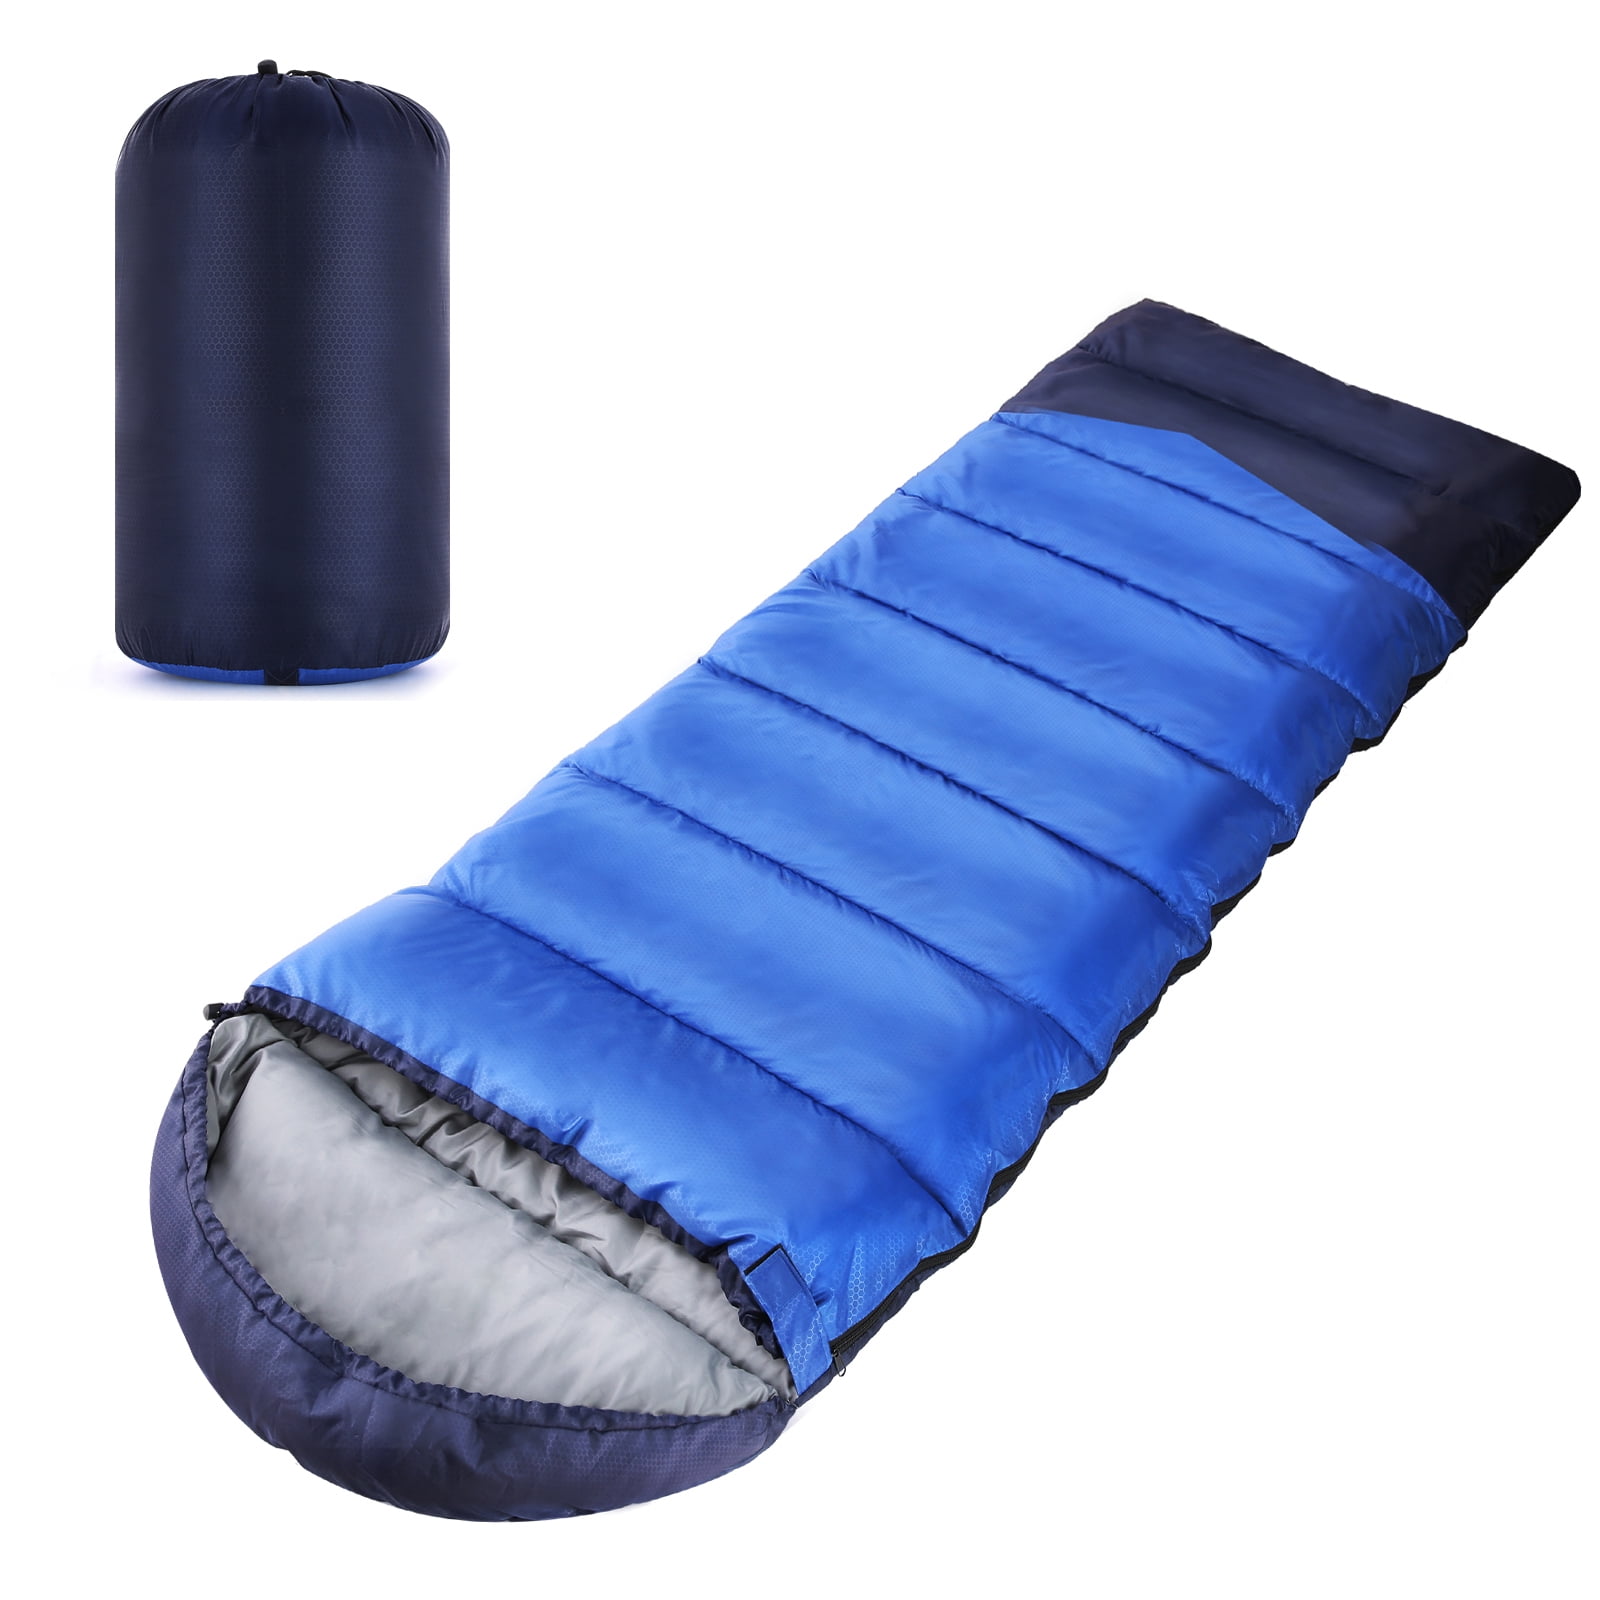 Sleeping Bag - 4 Seasons Warm Cold Weather Lightweight, Portable, Waterproof Sleeping Bag Compression - Walmart.com